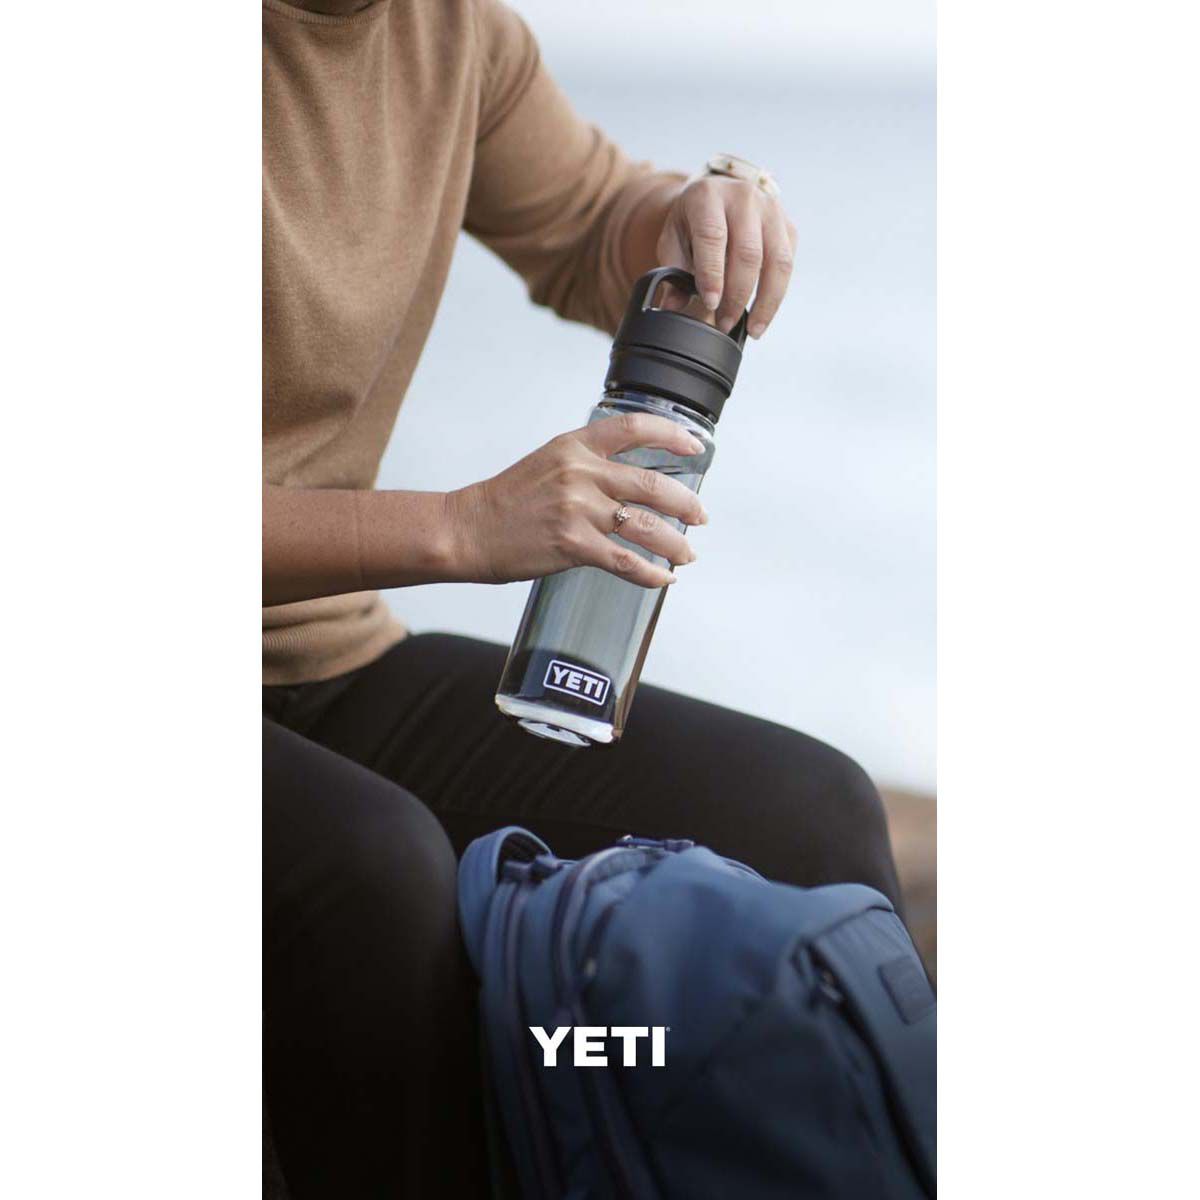 Yeti Yonder 1 L/34 oz. Water Bottle - Power Pink